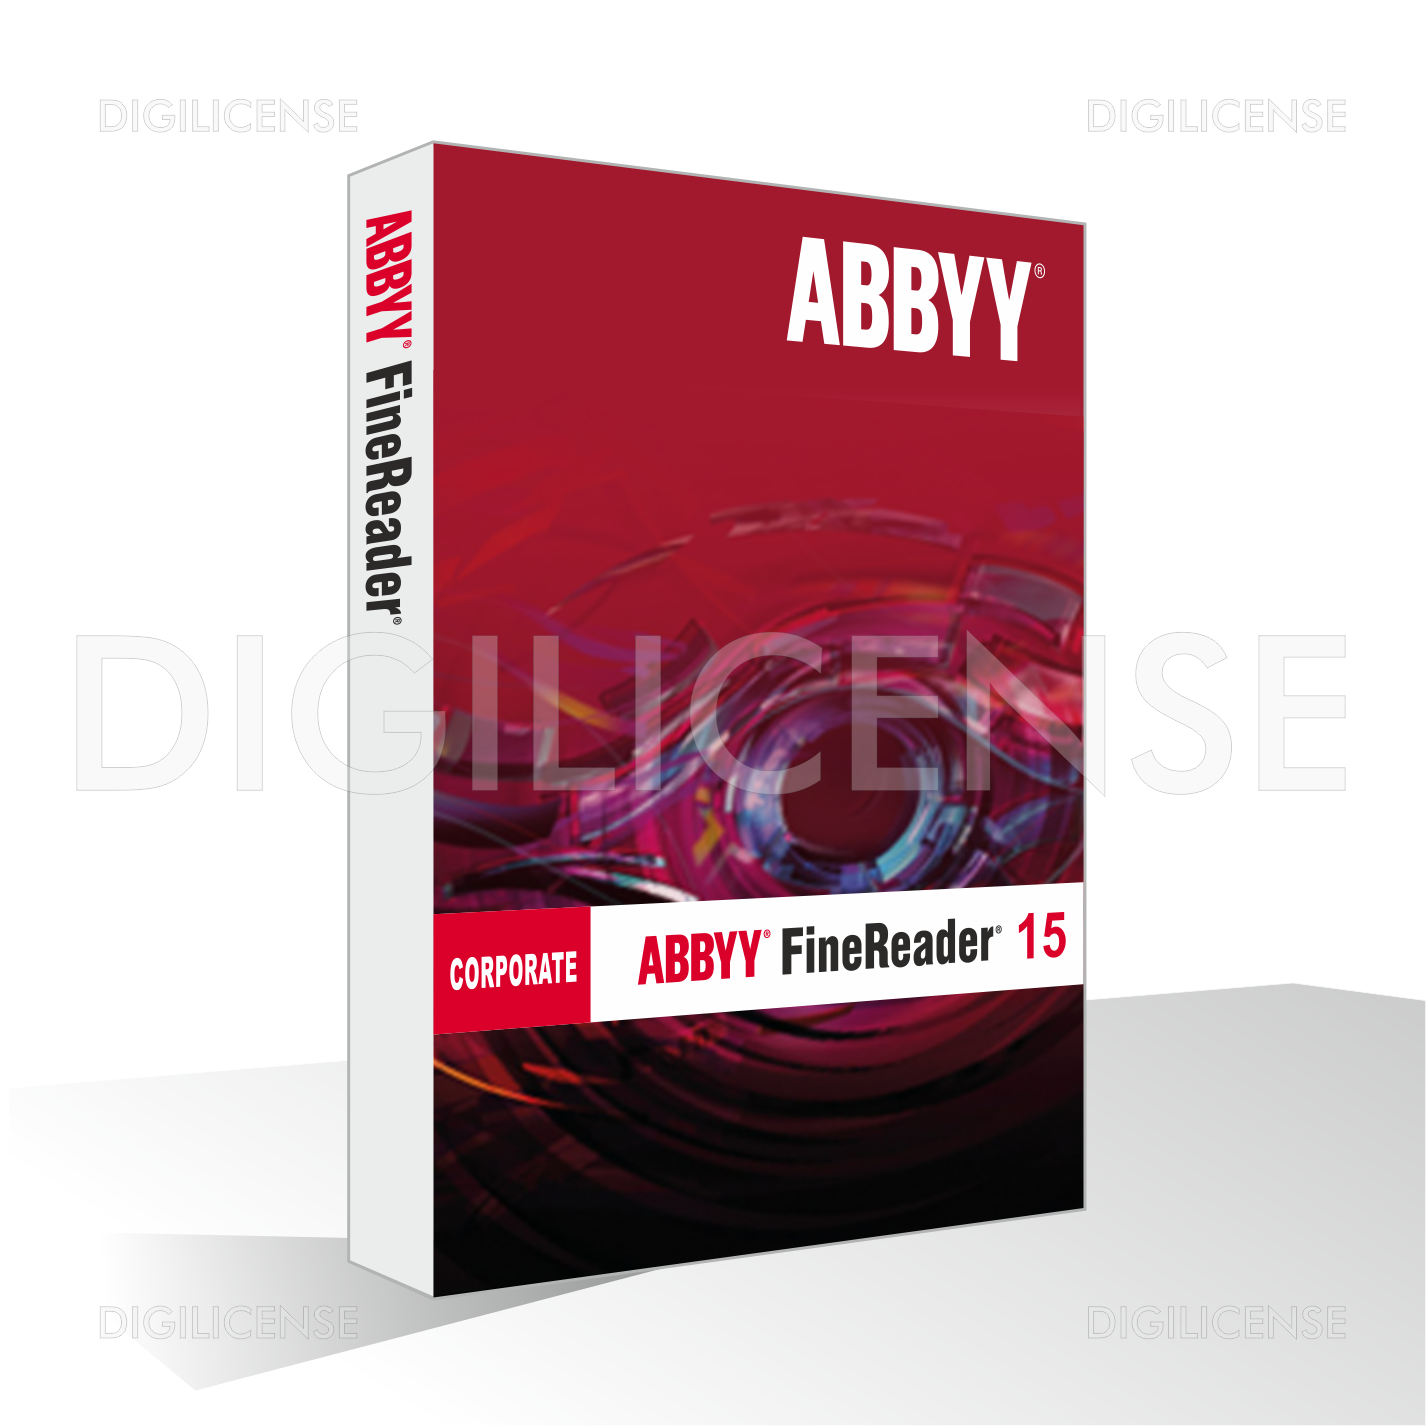 ABBYY Finereader 15 Corp Edu ESD, 886389177614 